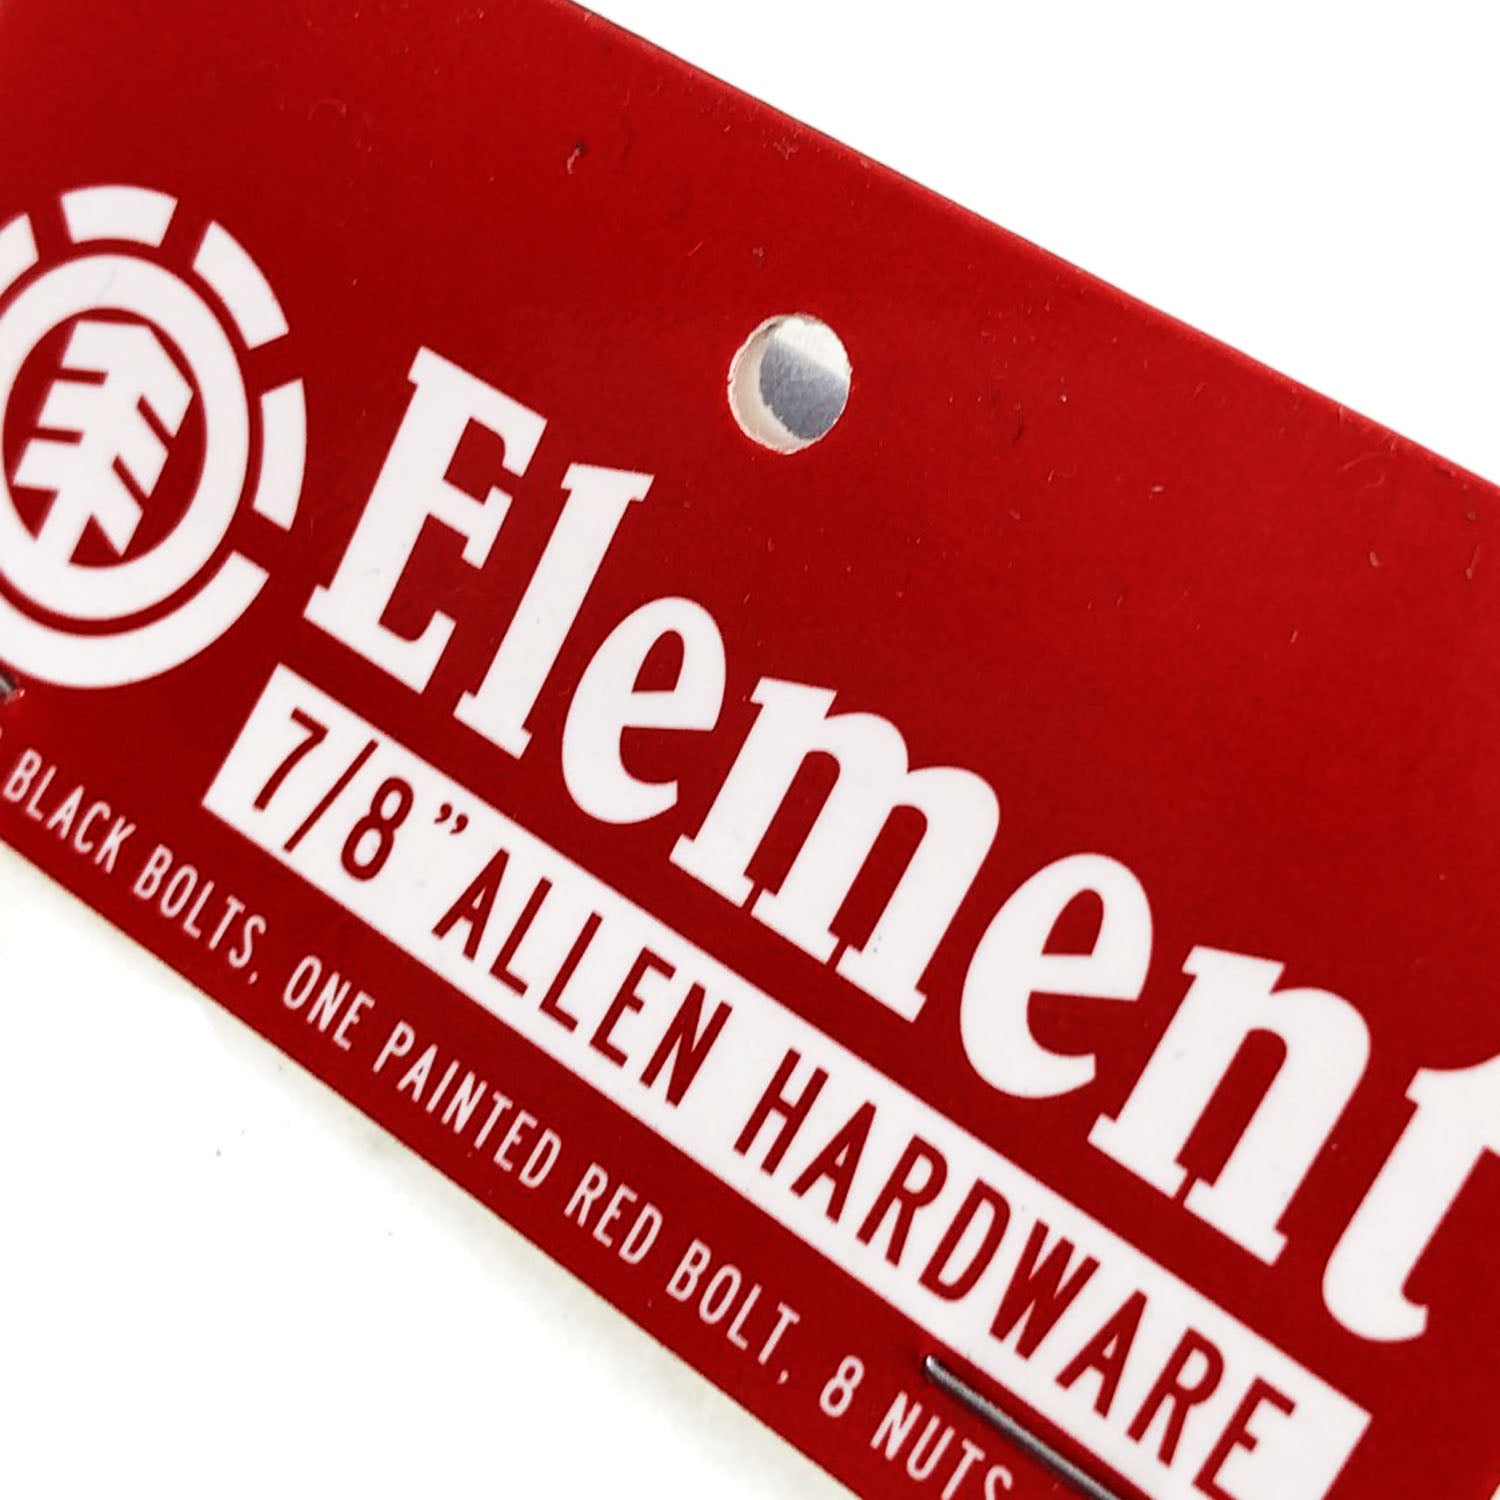 Element Bolts Allen 7/8" - Black / Red - Prime Delux Store